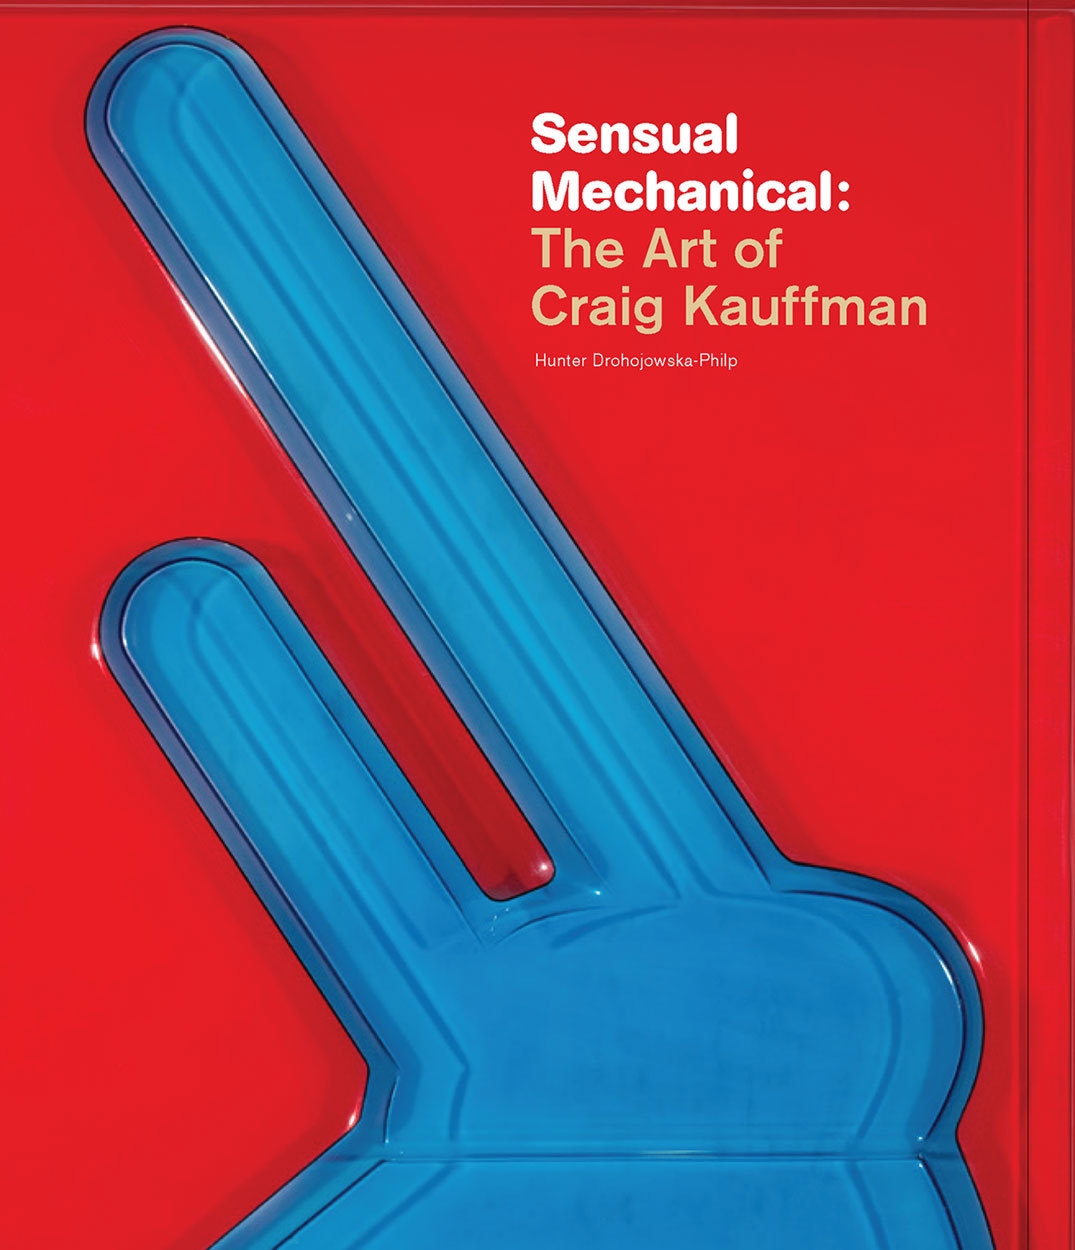 Sensual Mechanical: The Art of Craig Kauffman, Frank Lloyd Gallery, Los Angeles 2013